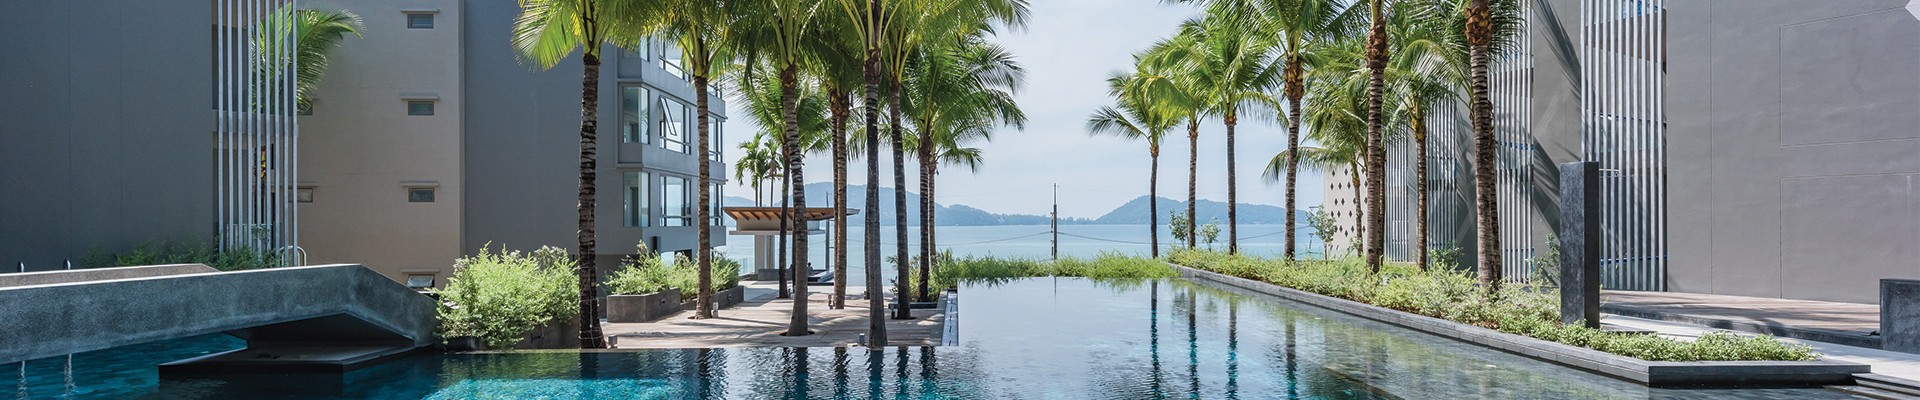 5* Oceanfront Beach Resort & Spa - Thailand Package (7 Nights)